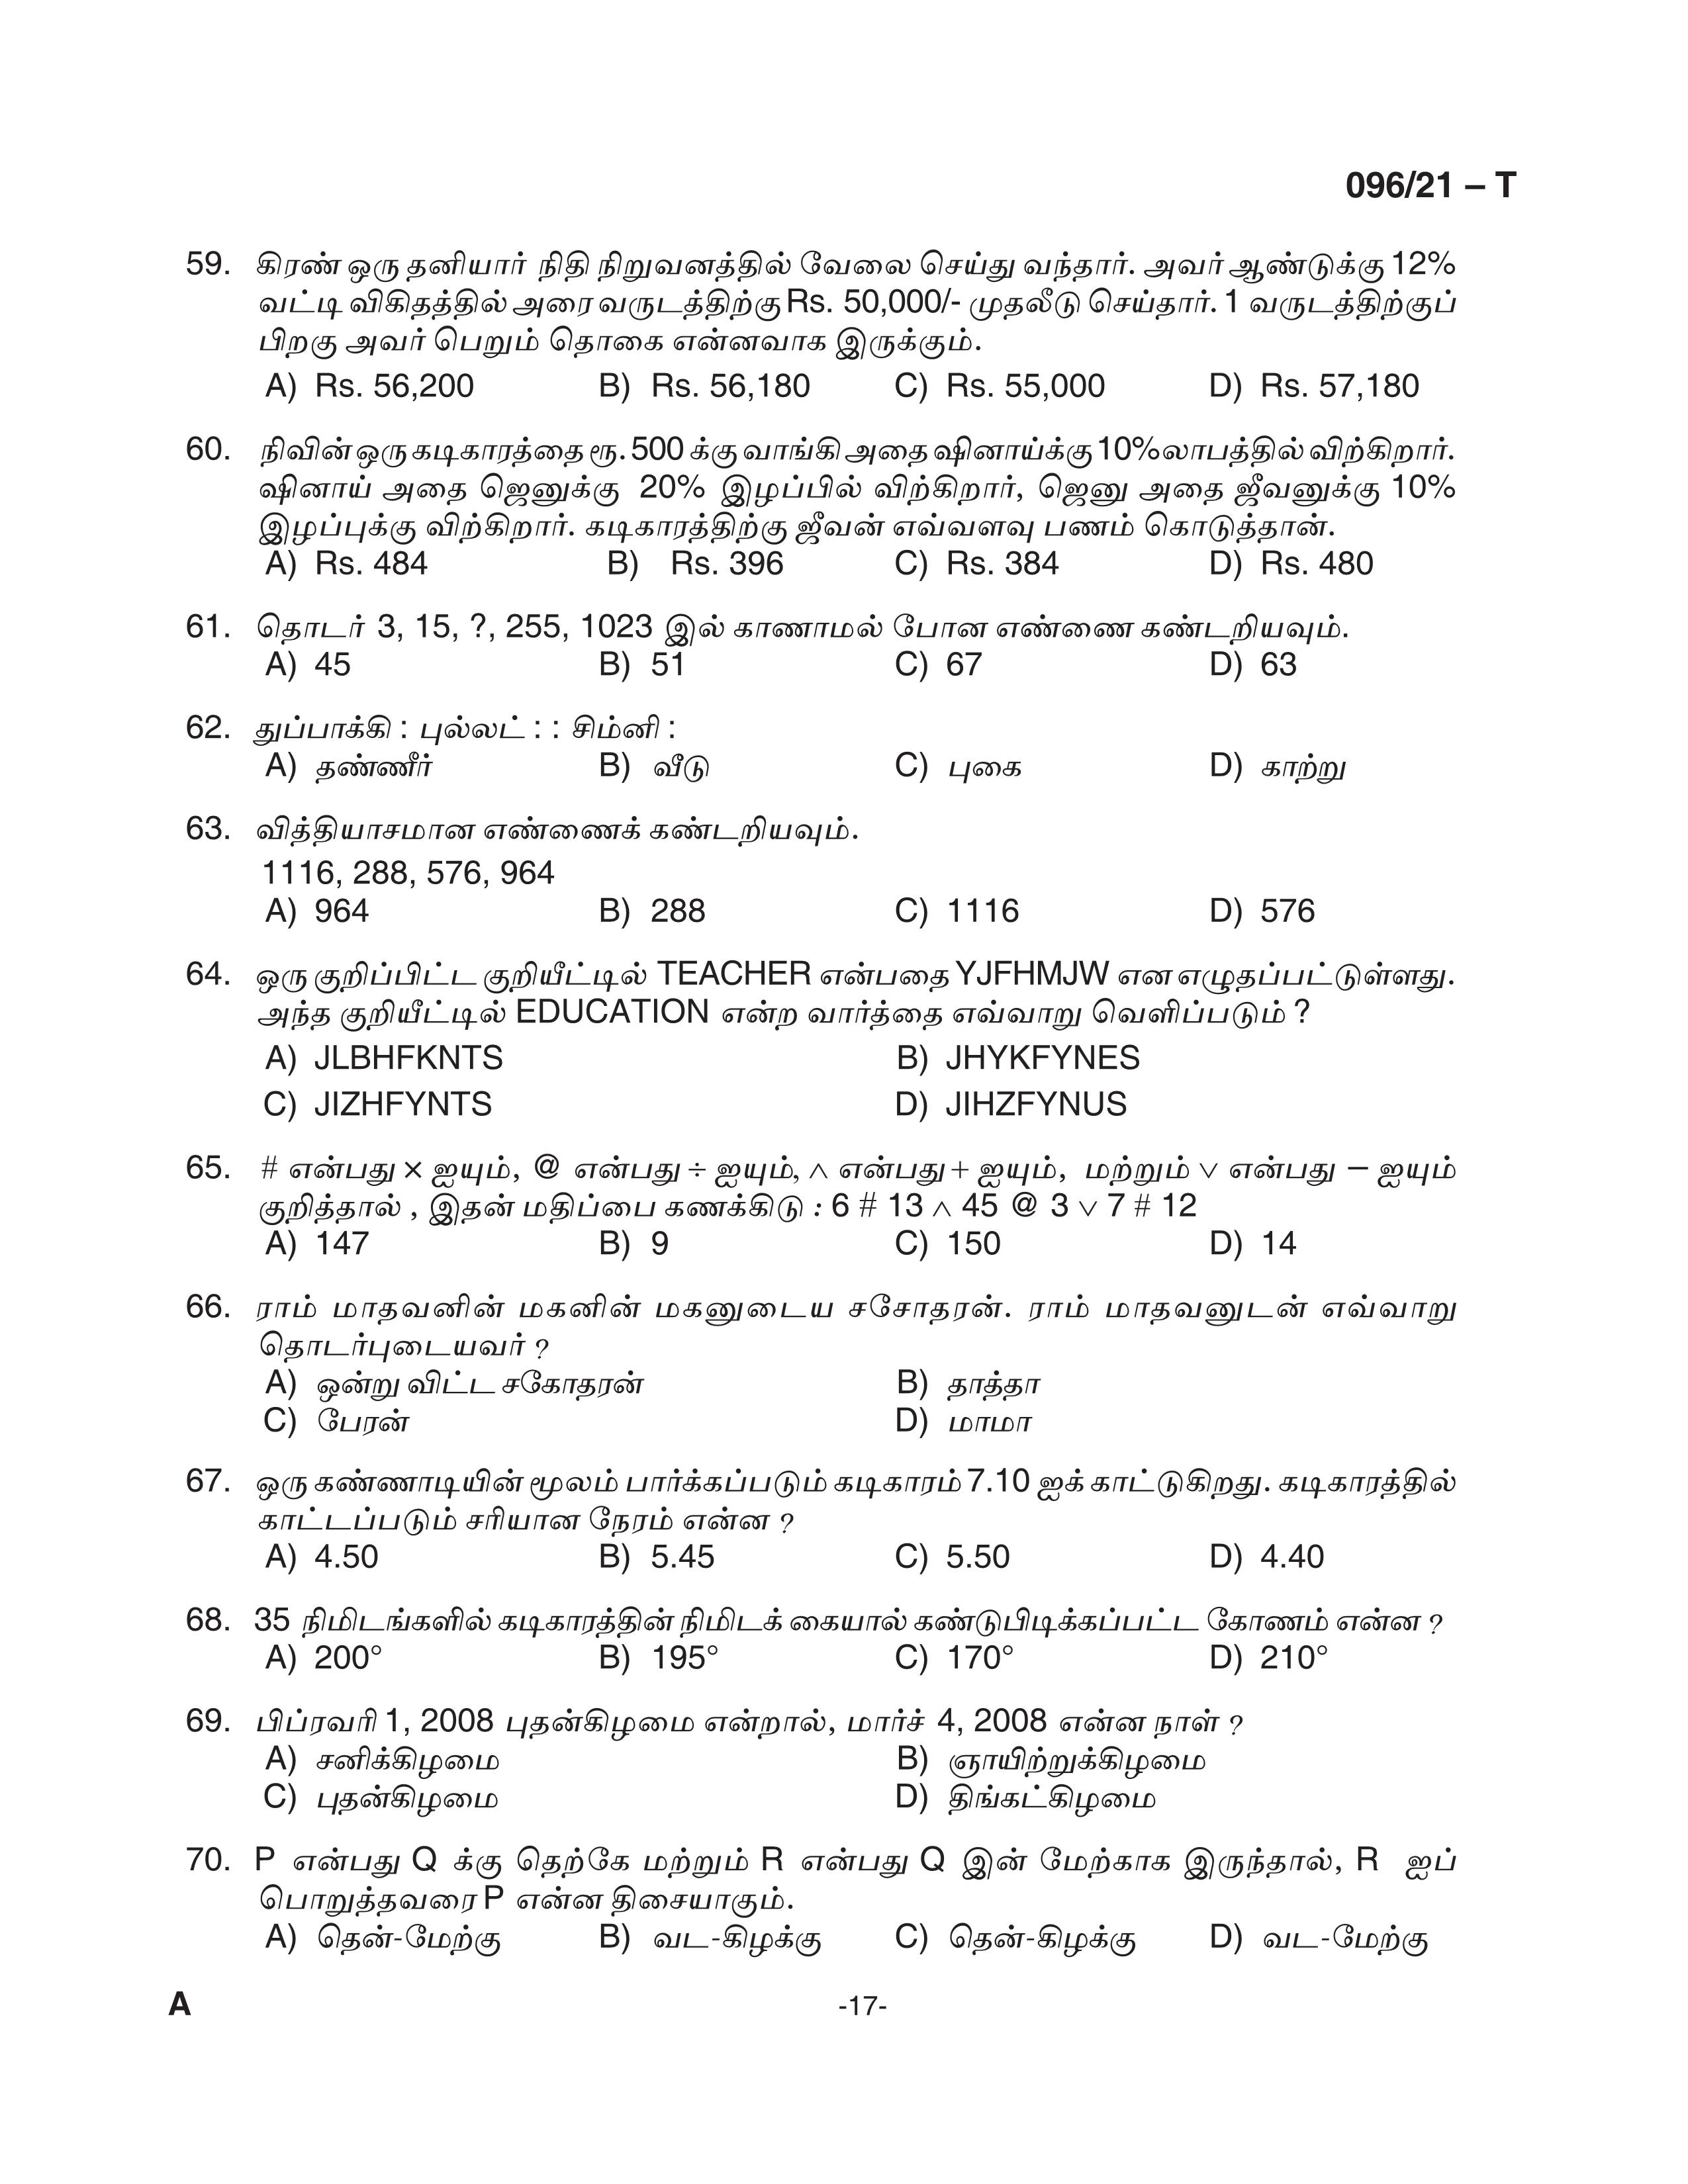 KPSC Degree Level Preliminary Exam Stage II Tamil Exam 2021 Code 09621 T 17